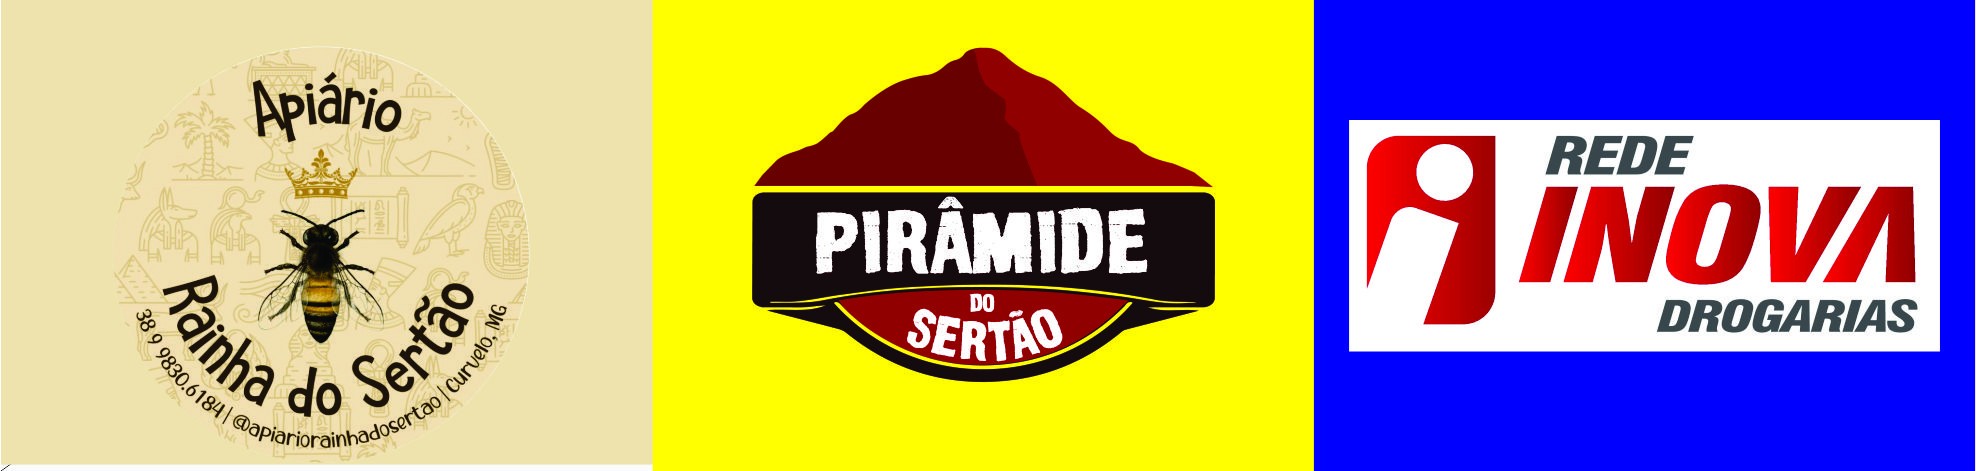 Pirâmide do Sertão